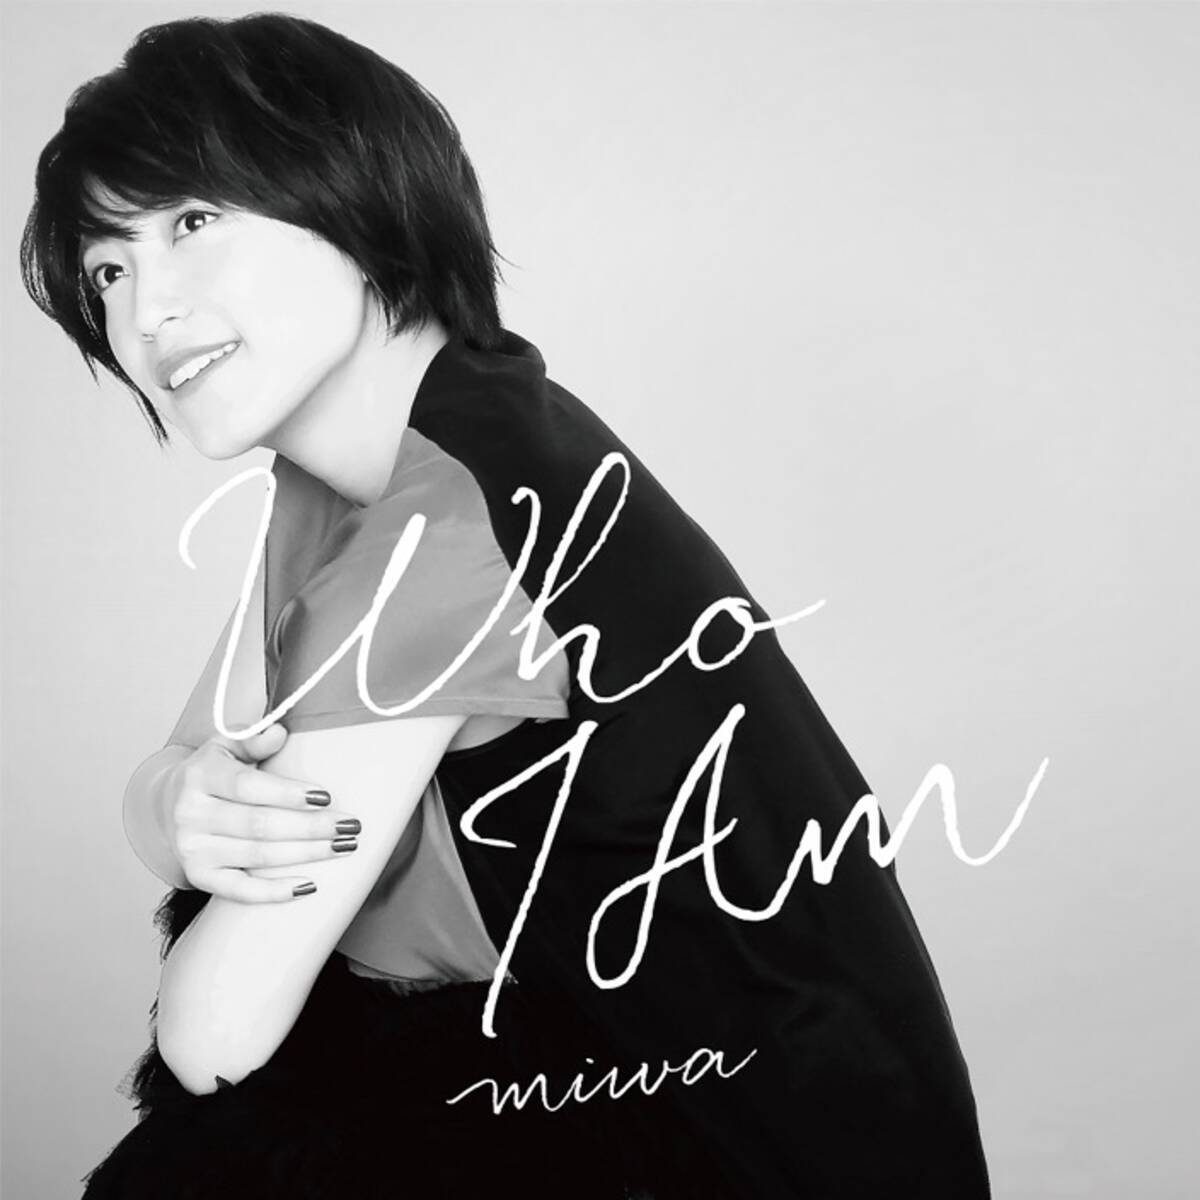 Miwa 新曲 Who I Am 配信リリース 自分らしさを取戻し 再び輝くと書いて 再輝 の曲です 年3月日 エキサイトニュース